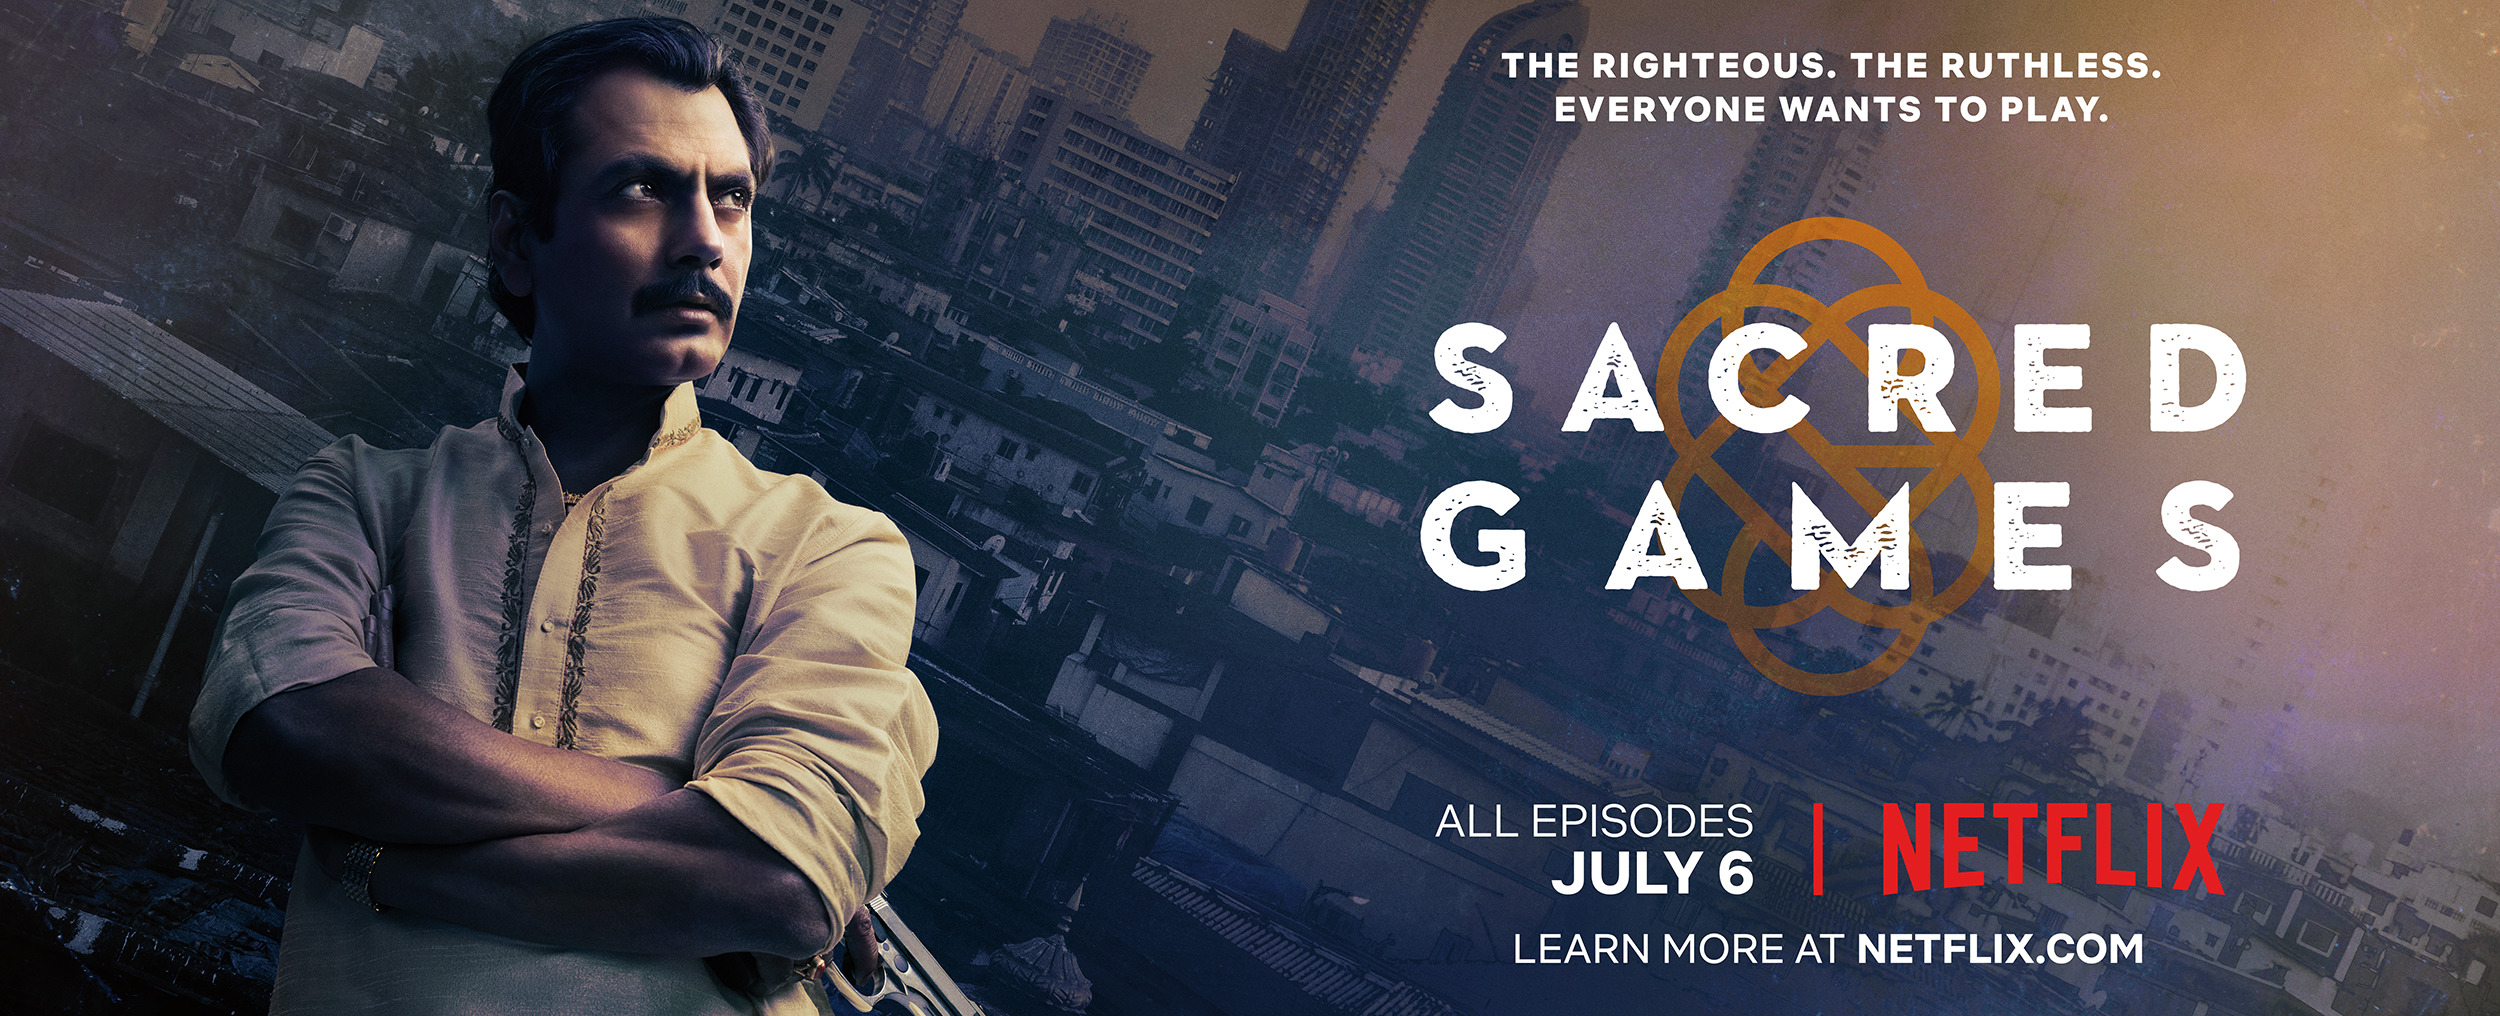 Mega Sized TV Poster Image for Sacred Games (#9 of 20)